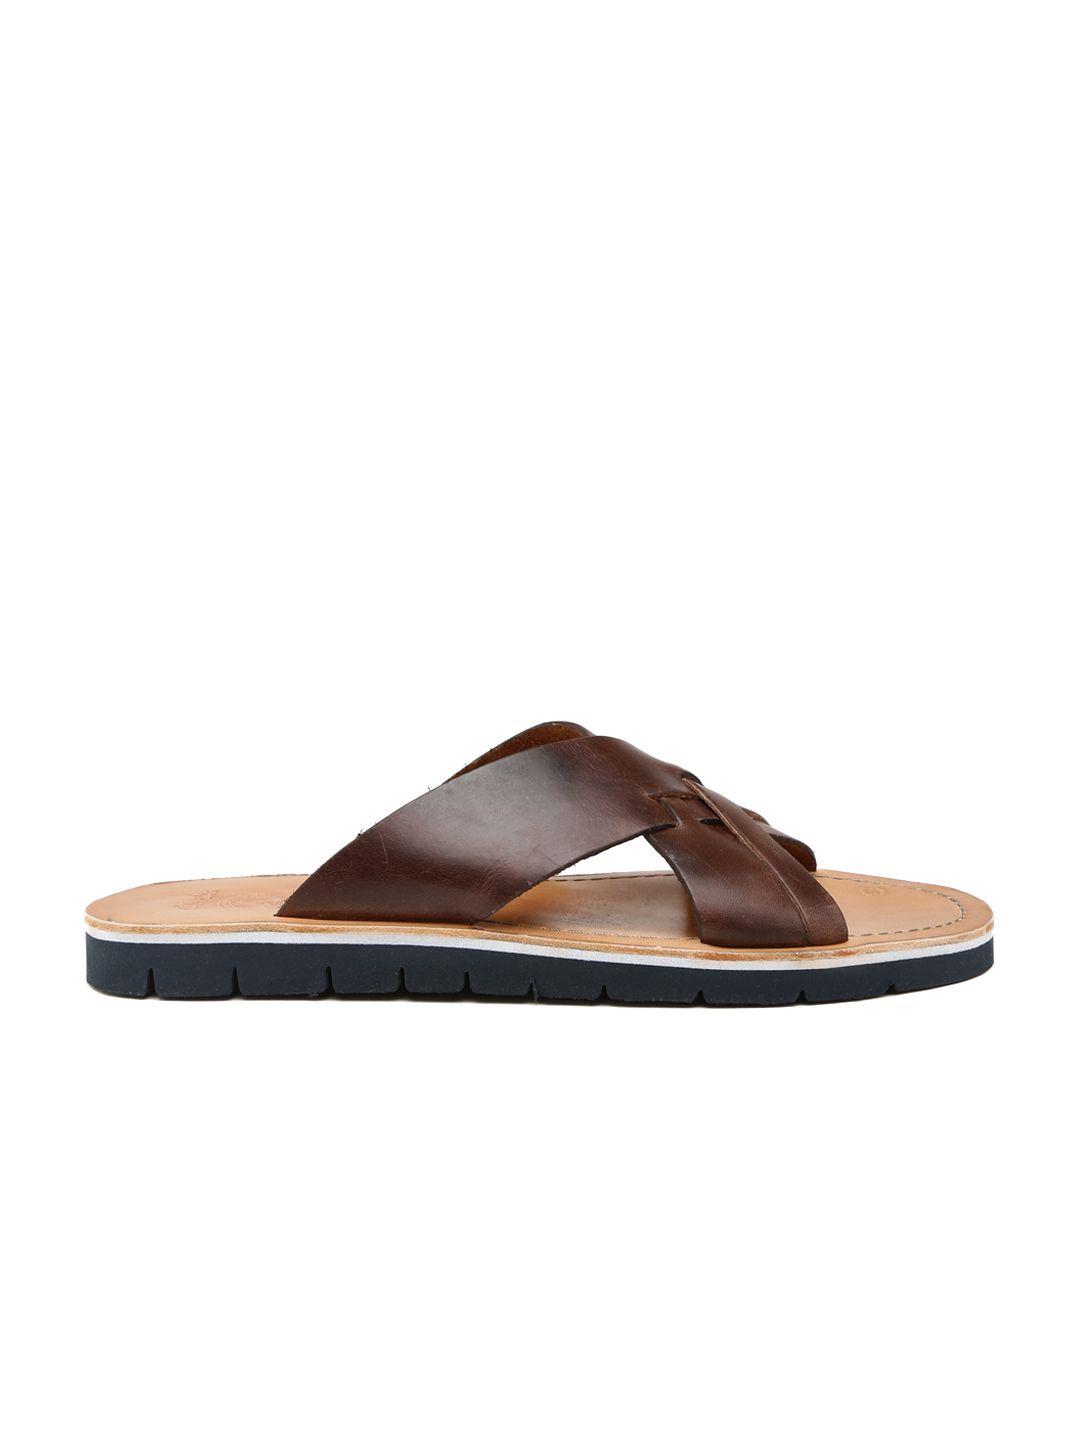 clarks-men-brown-pennard-cross-leather-sandals